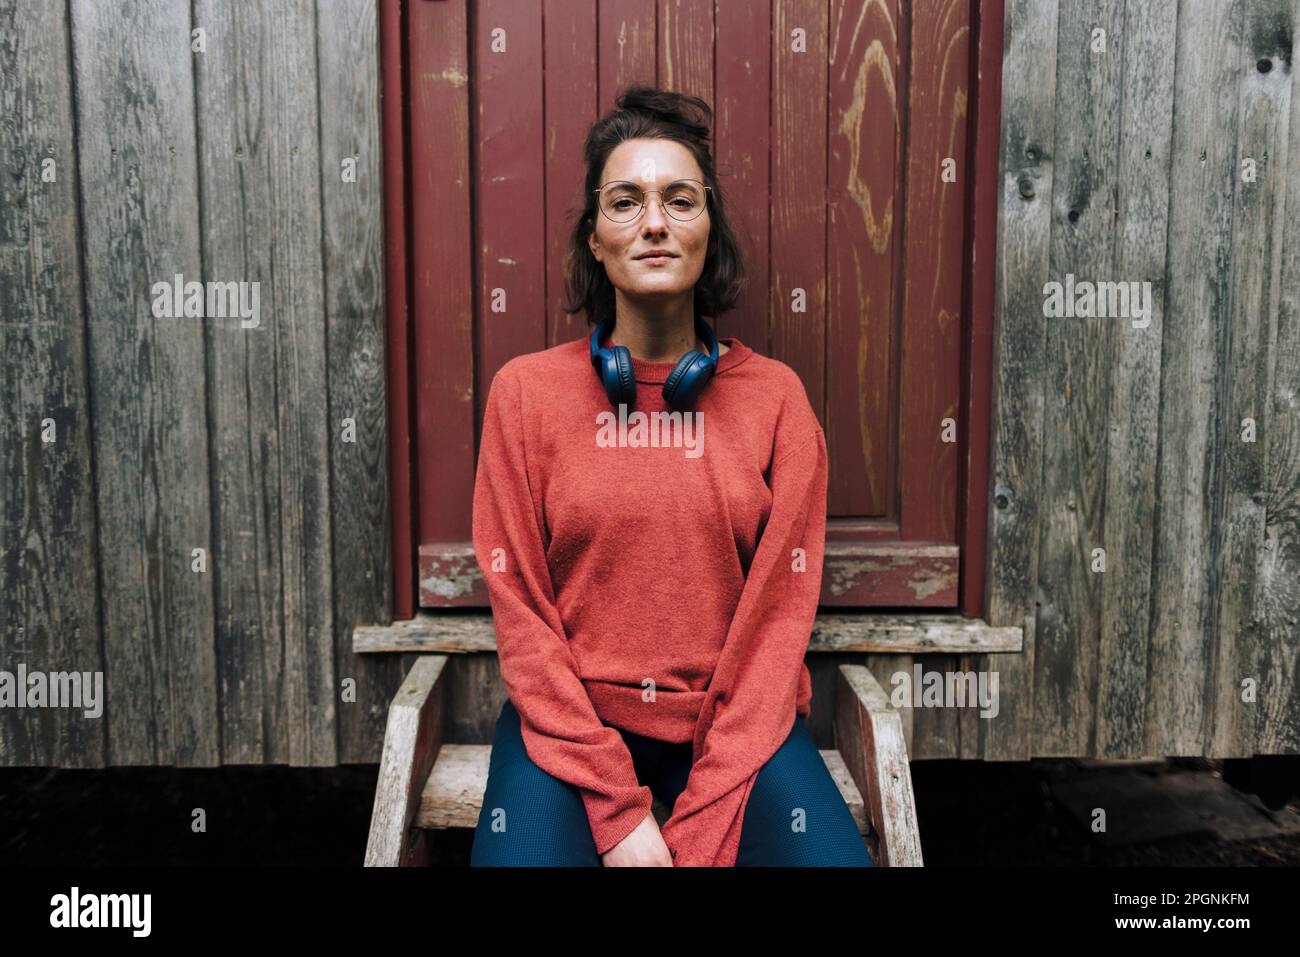 Smiling woman with wireless headphones sitting in front of door Stock Photo